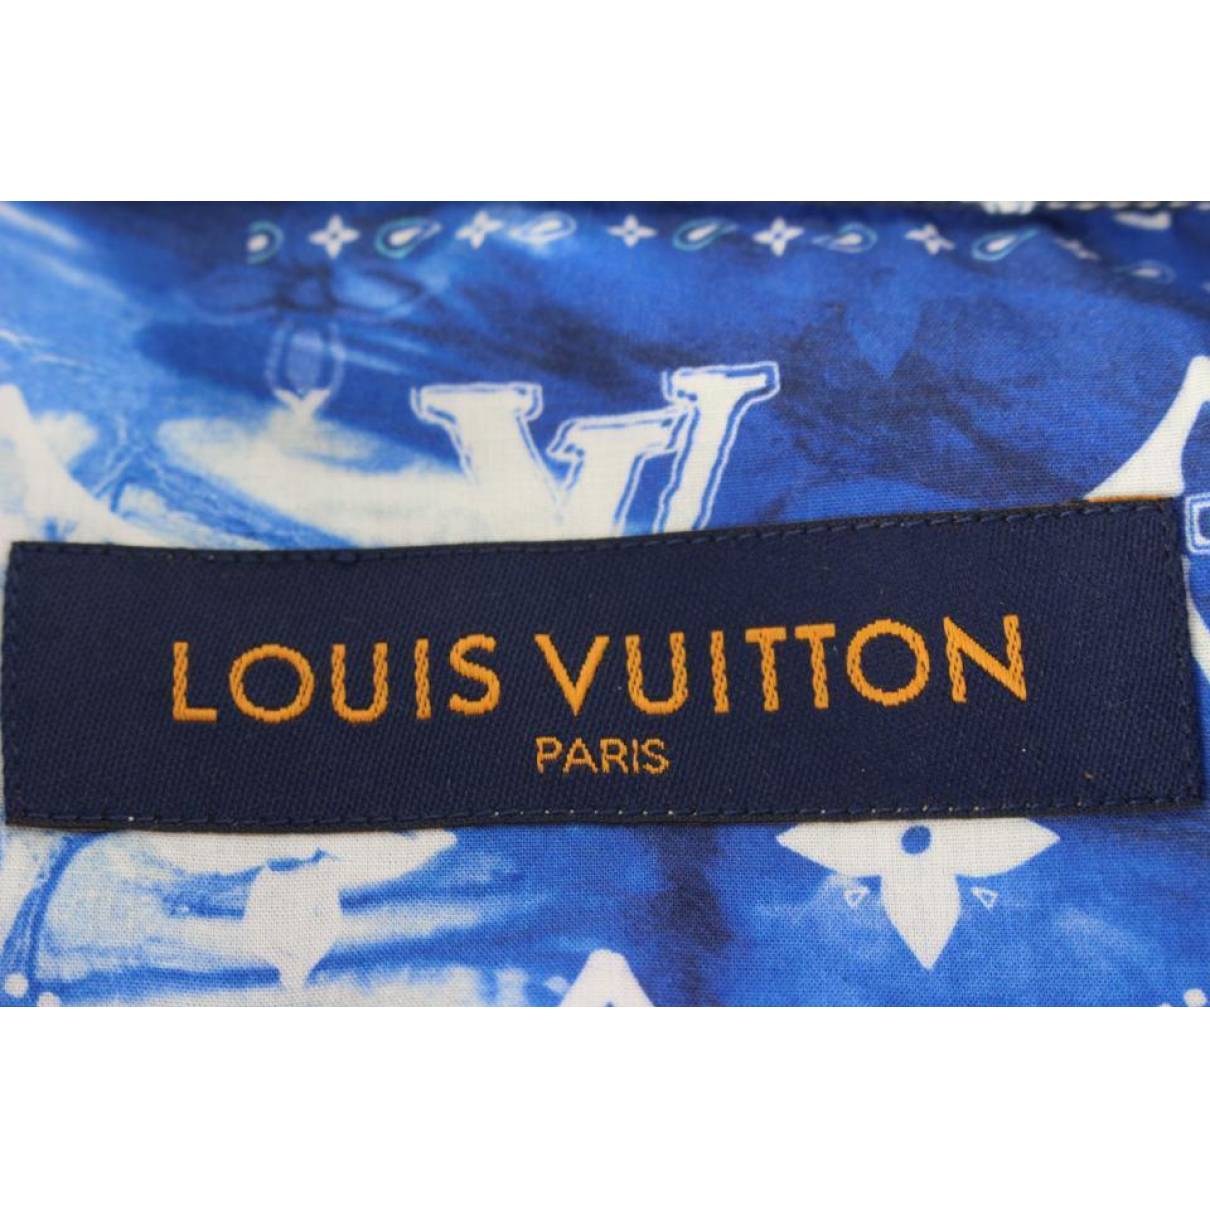 T-shirt Louis Vuitton Blue size S International in Cotton - 37025429